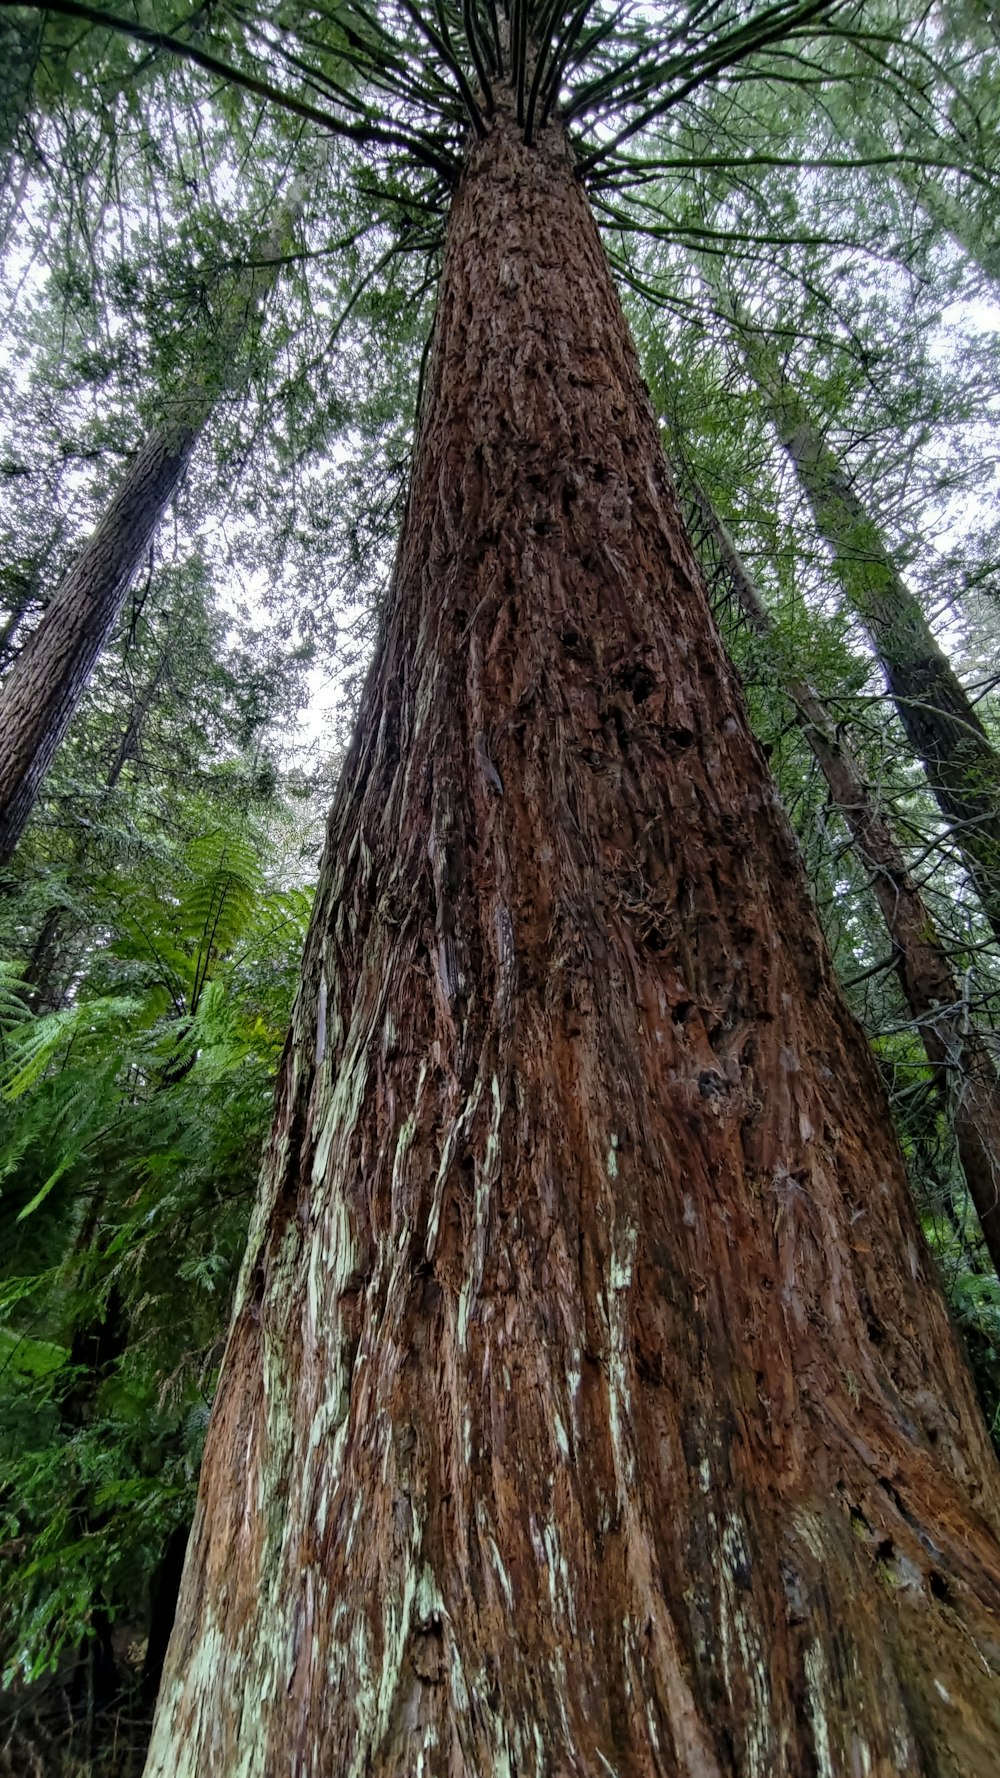 Un árbol alto en medio de un bosque